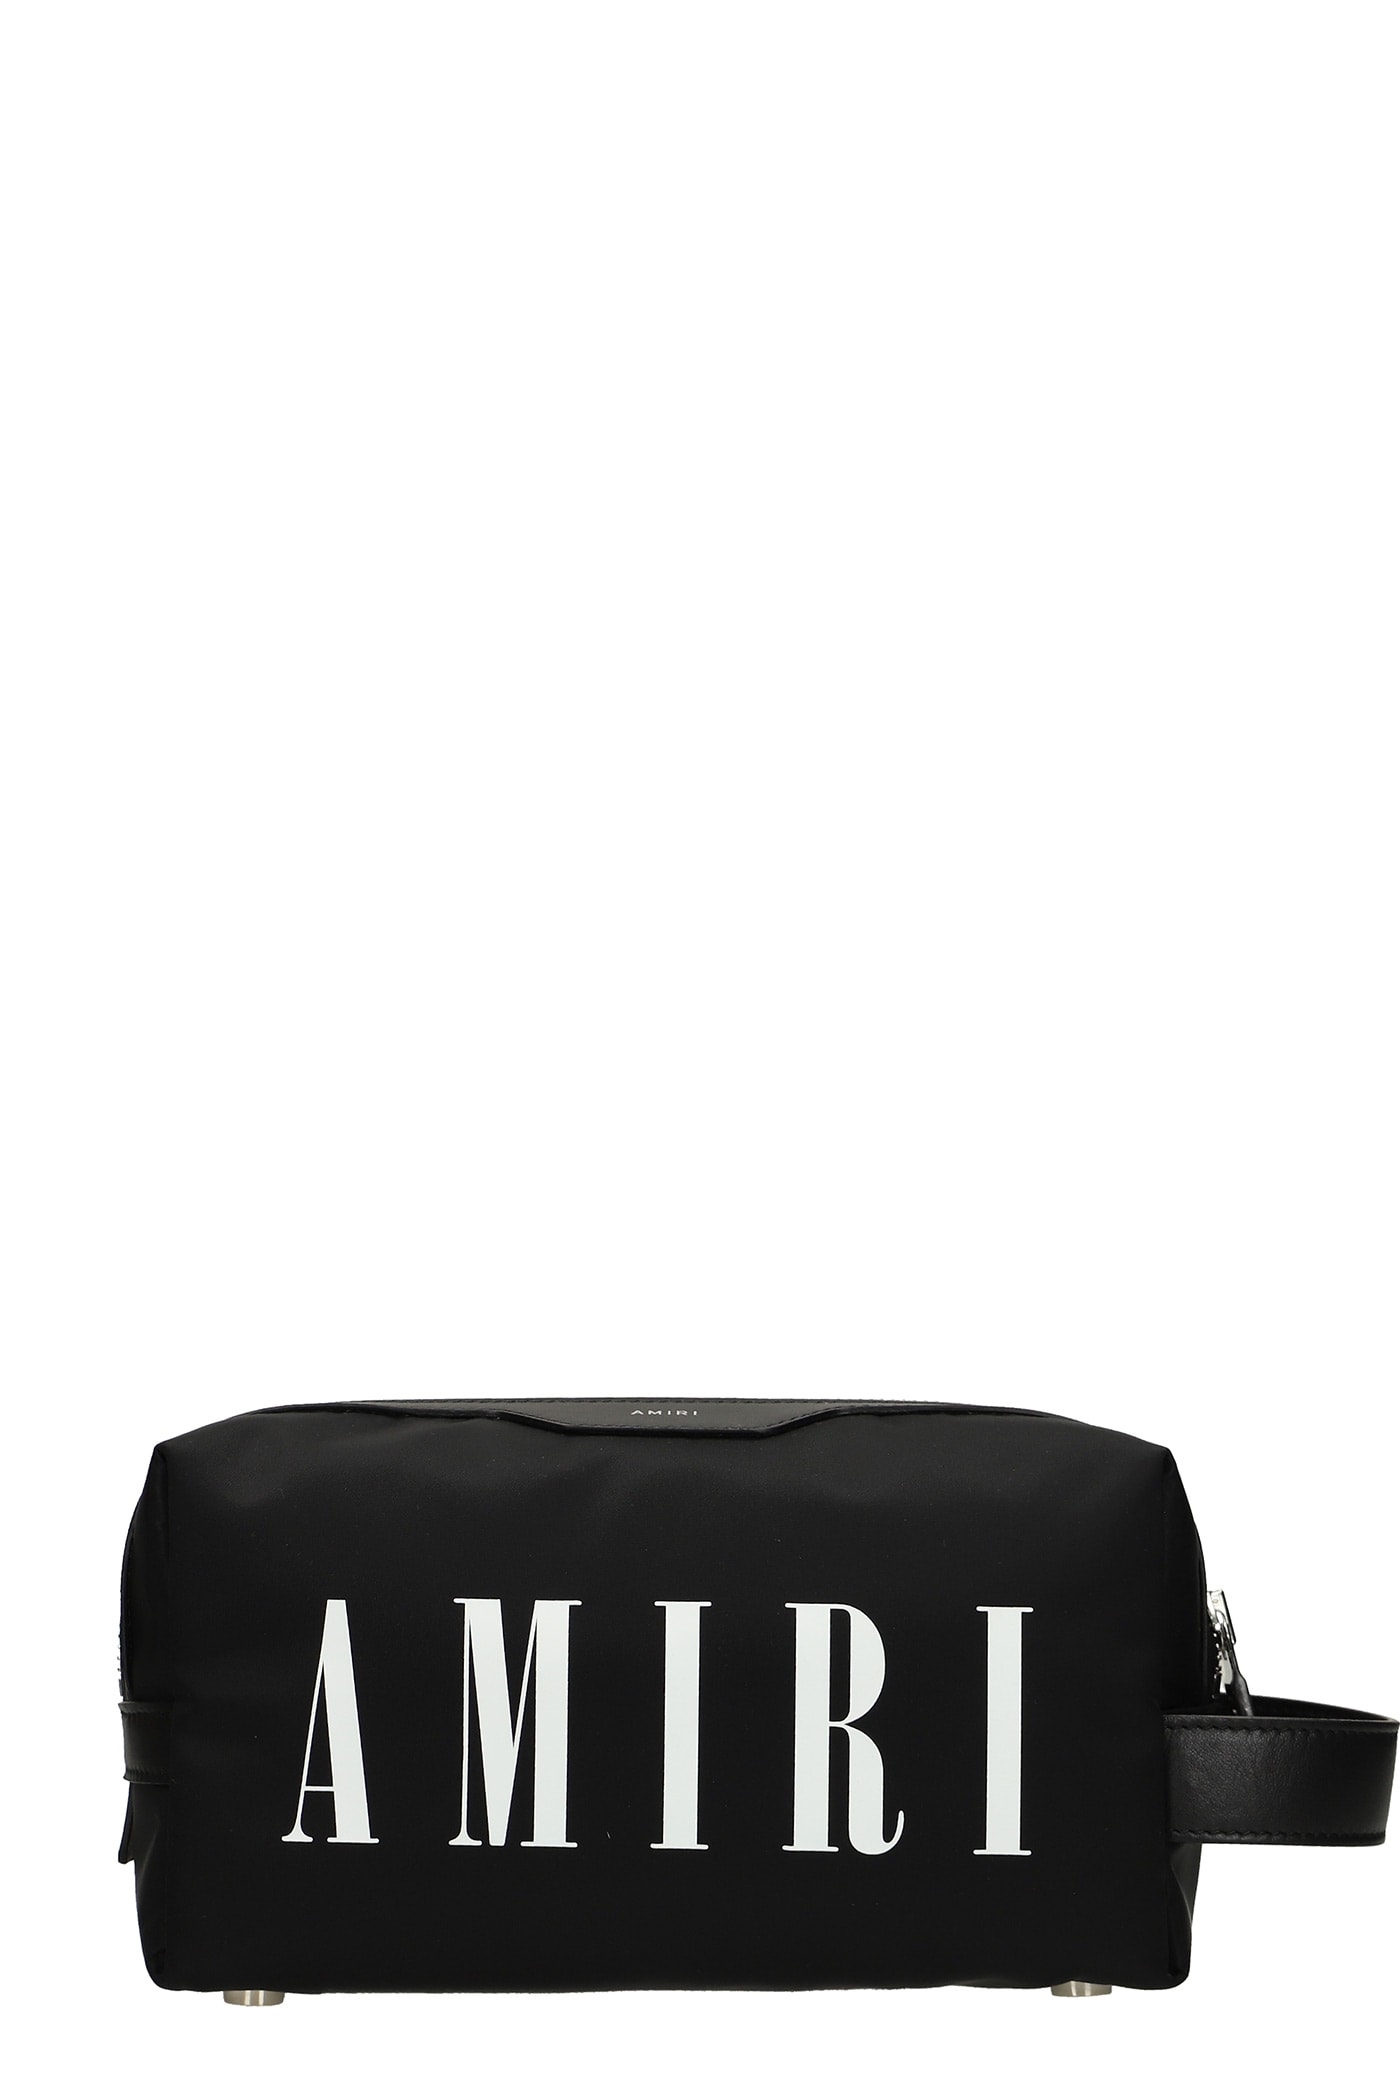 AMIRI Clutch In Black Nylon